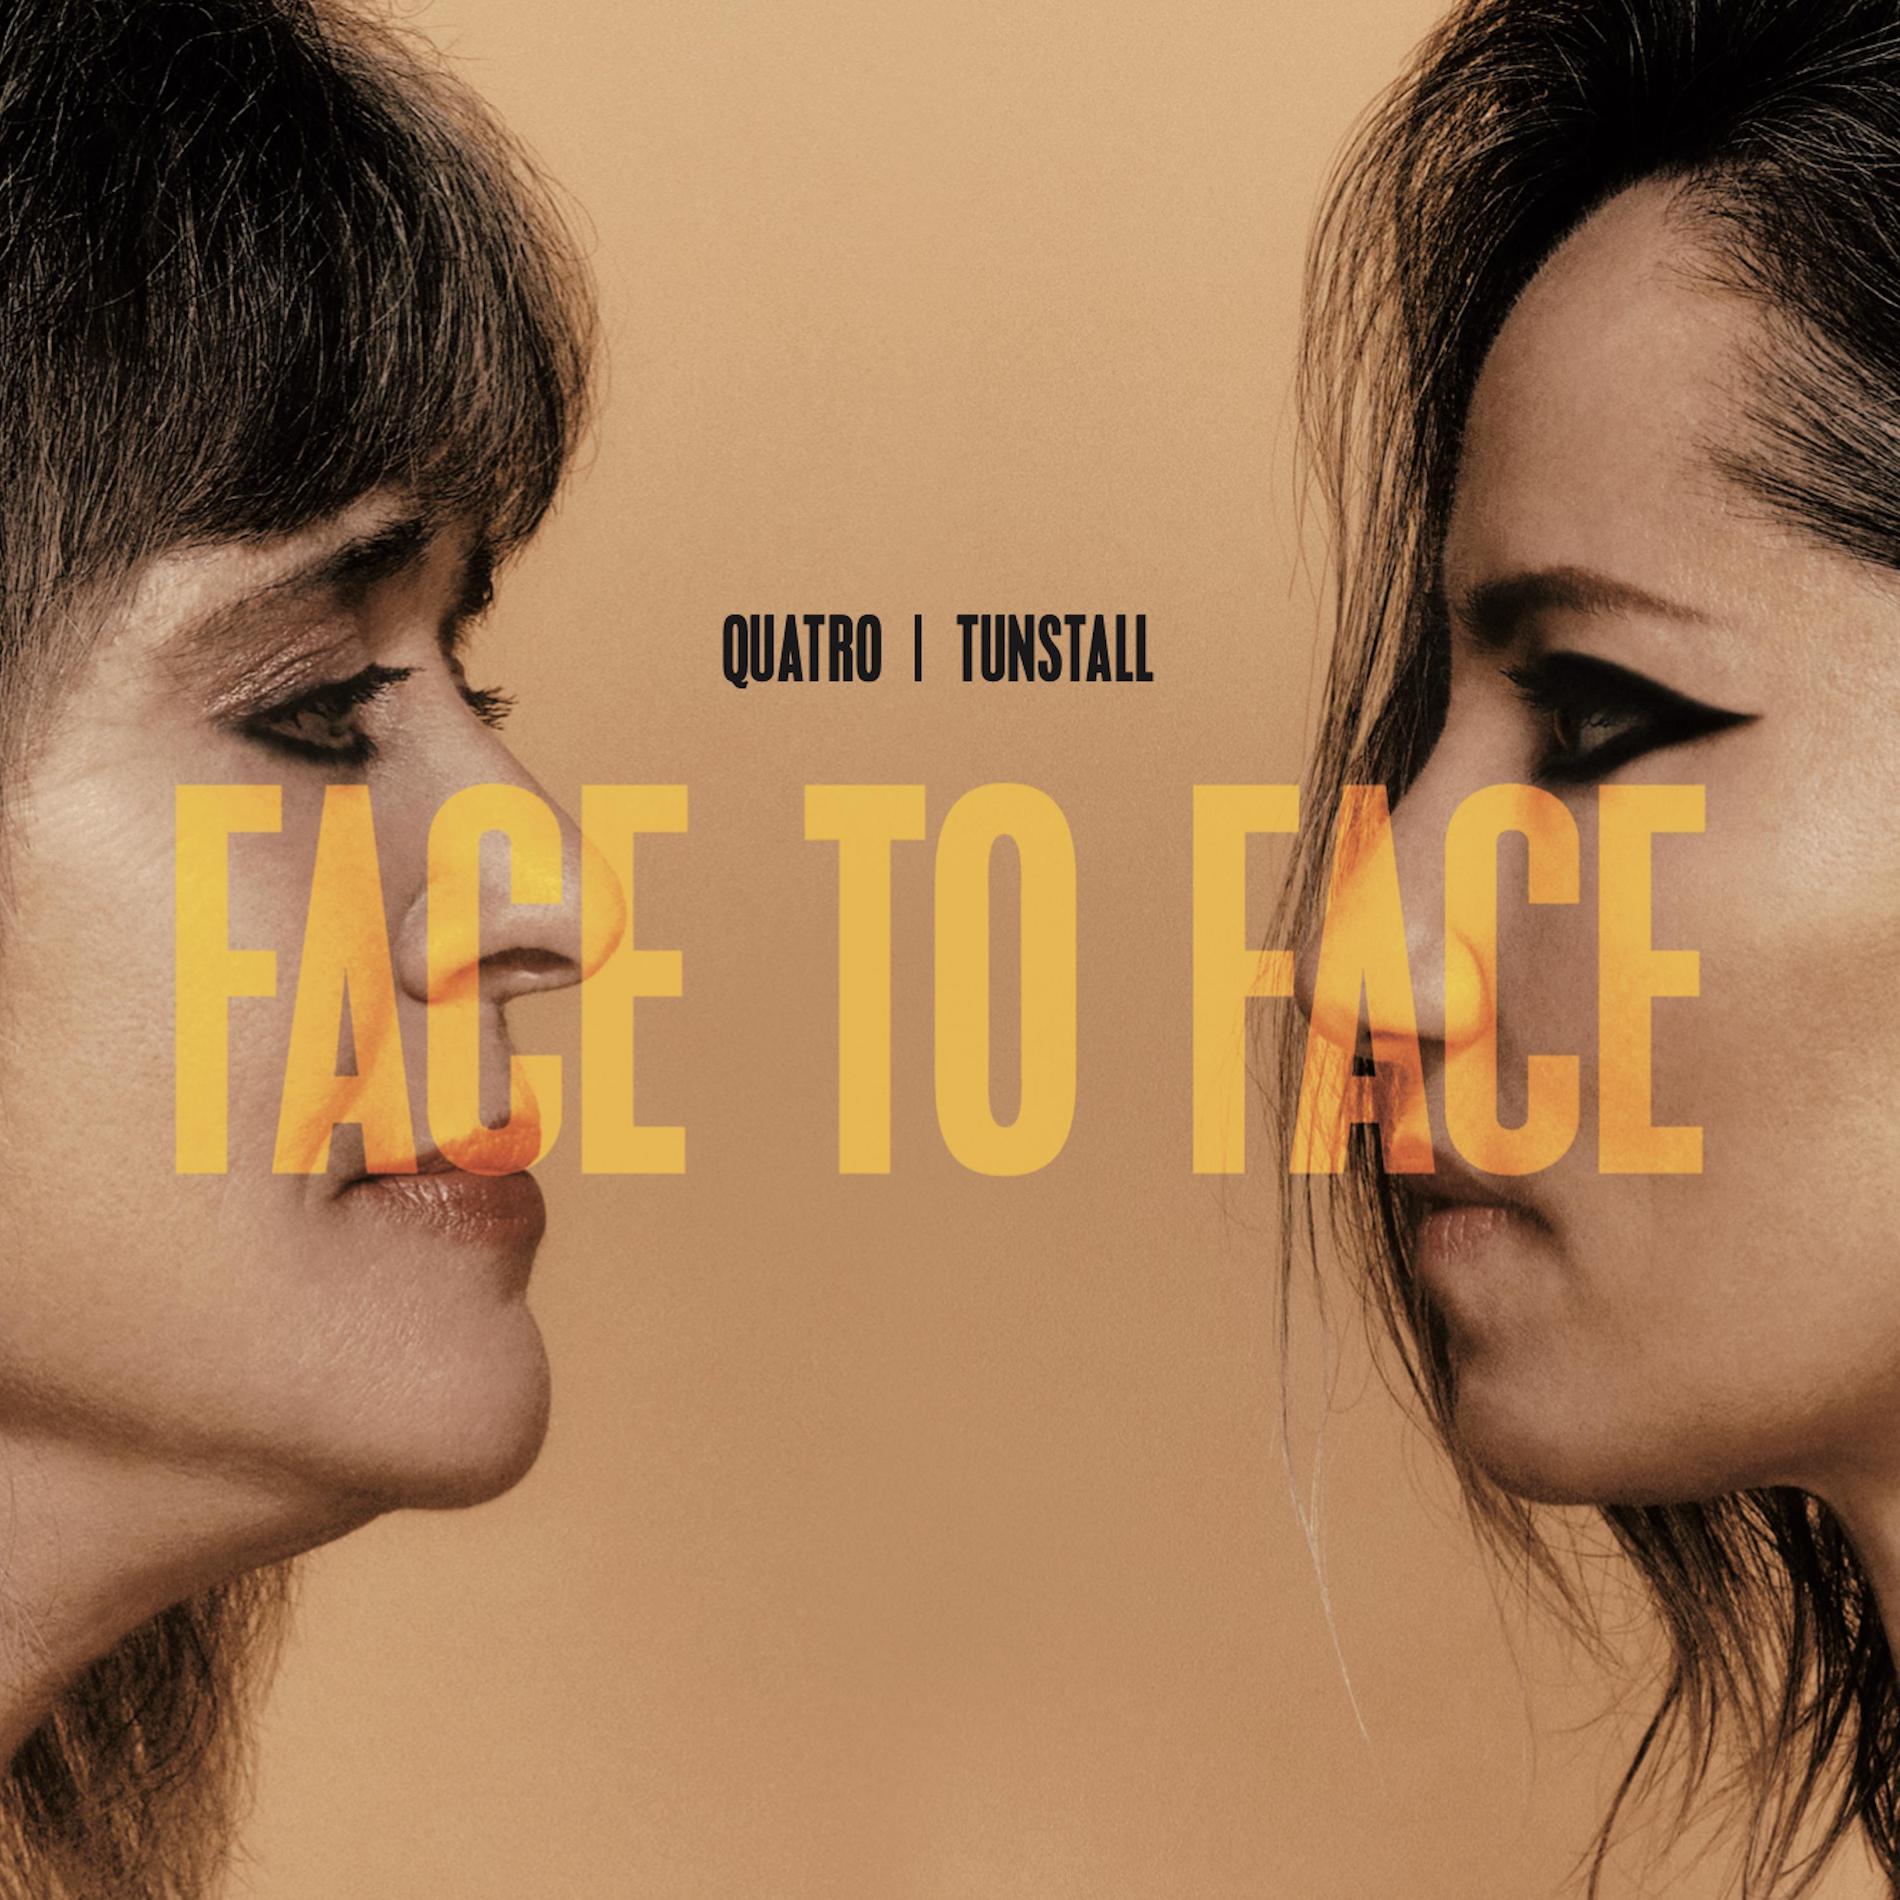 SUZI QUATRO Y KT TUNSTALL PUBLICAN SU LP "FACE TO FACE"